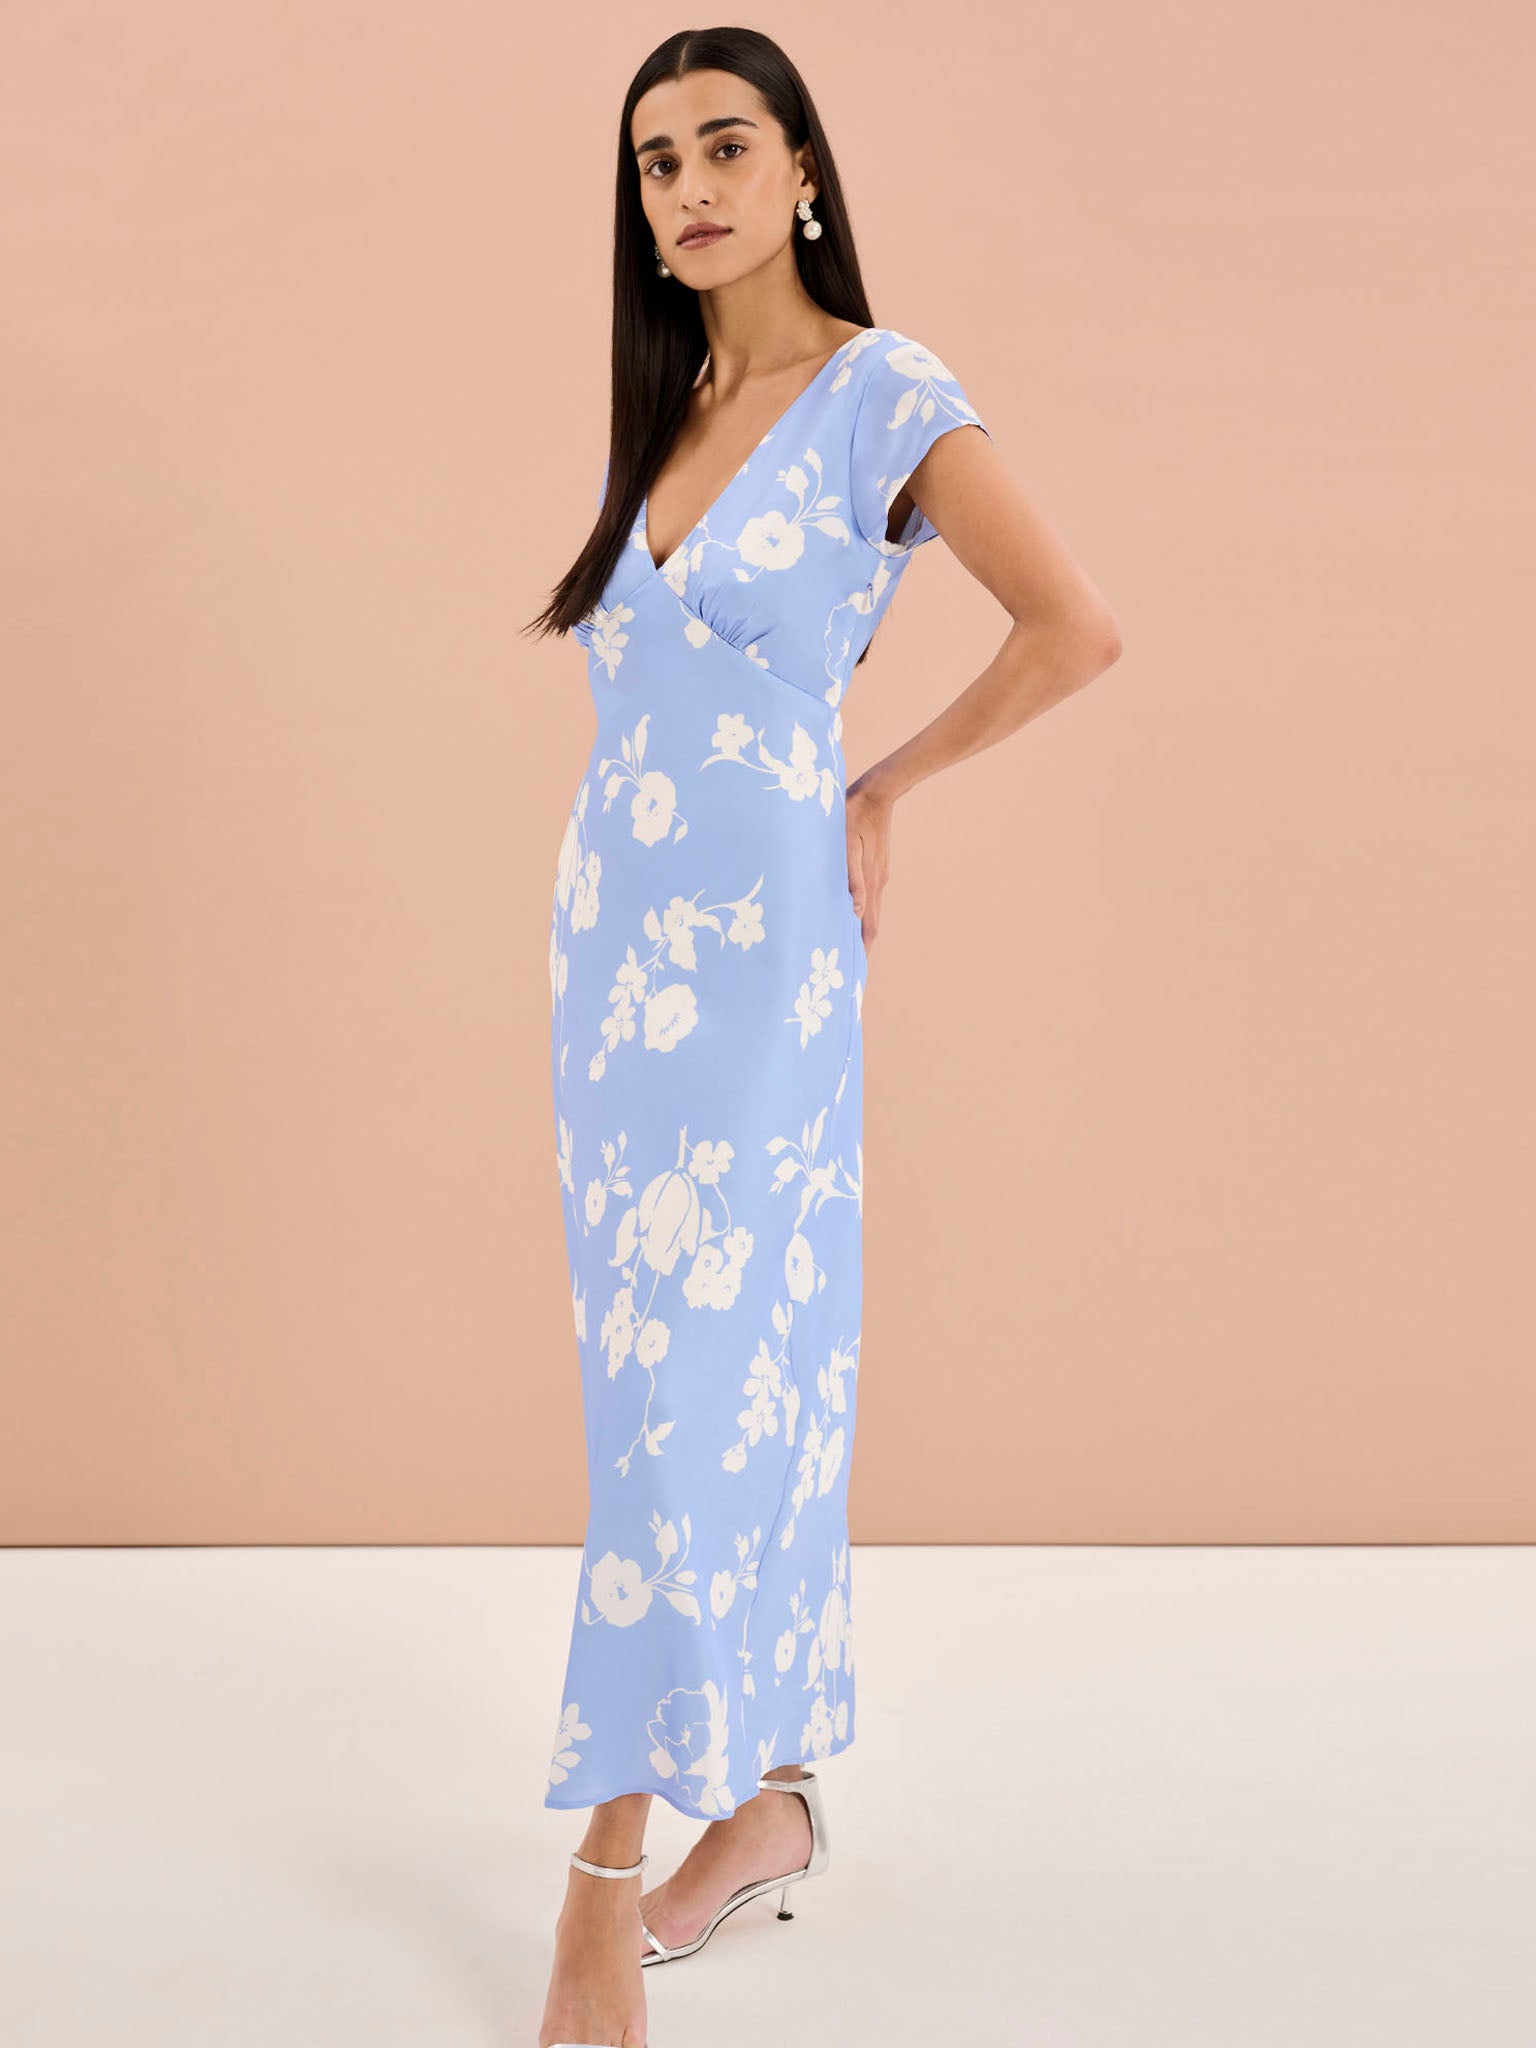 Woolf Short Sleeve Floral Slip Dress in Blue